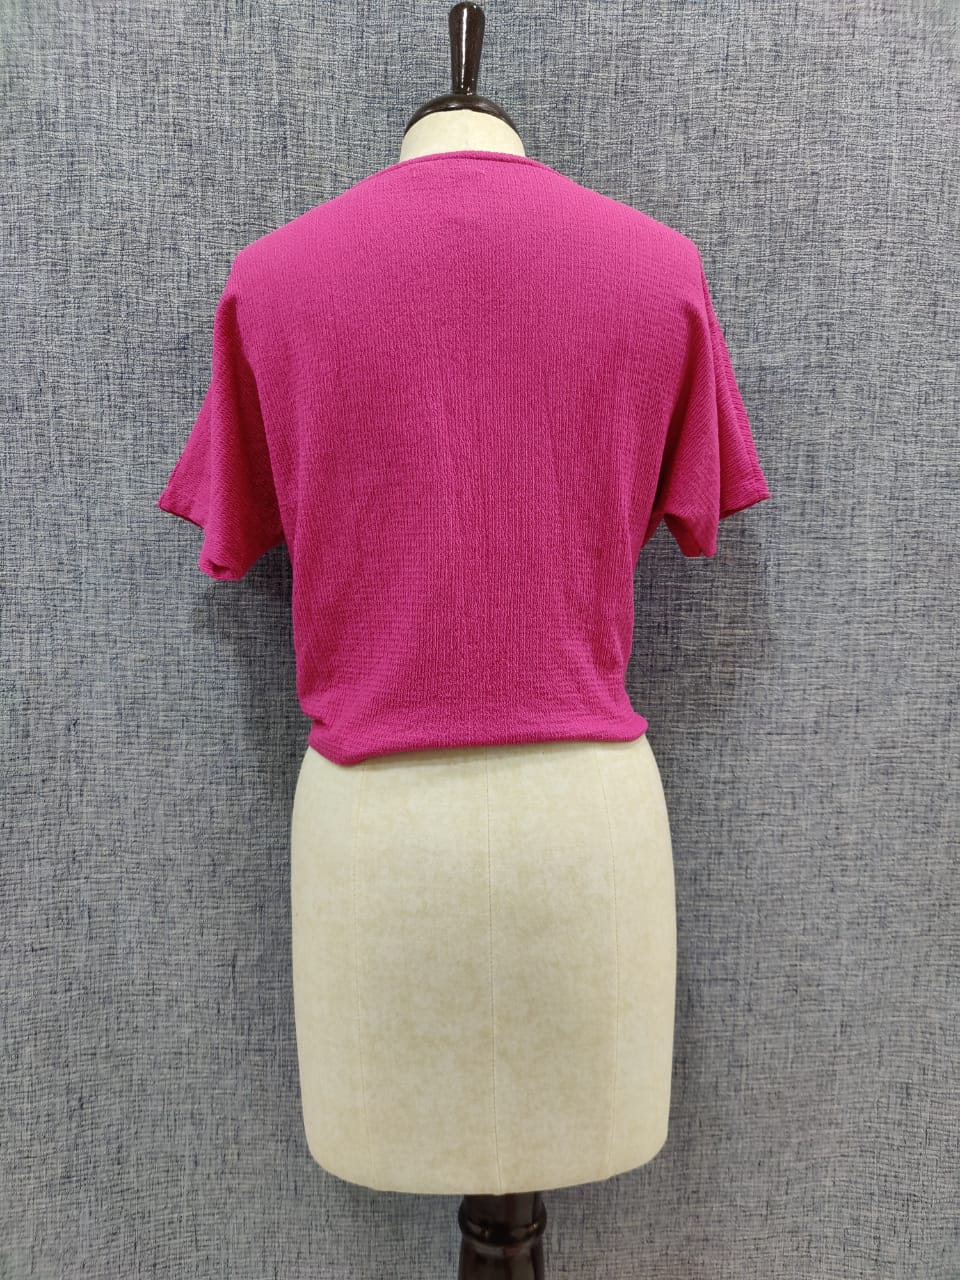 ZARA Hot Pink Knit Top | Relove